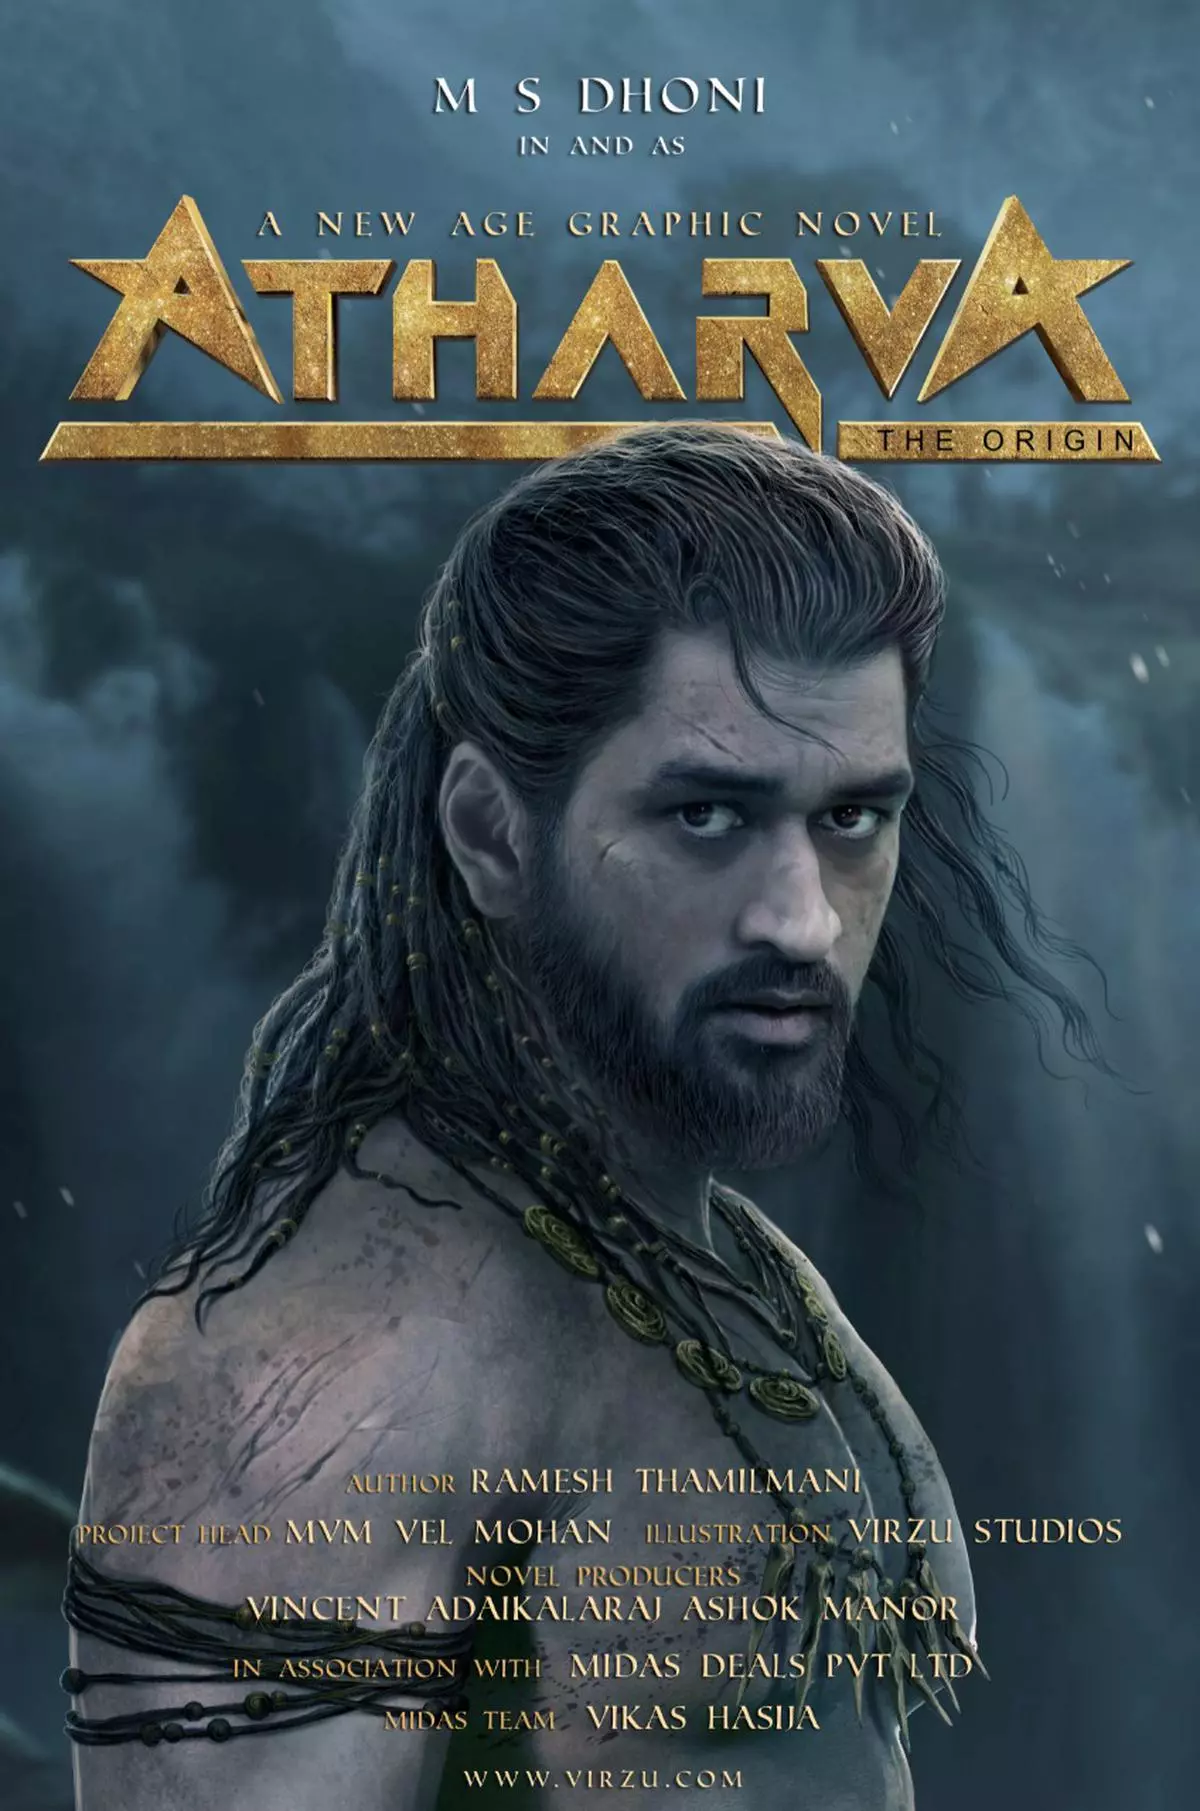 The cover image of ‘Atharva: The Origin’